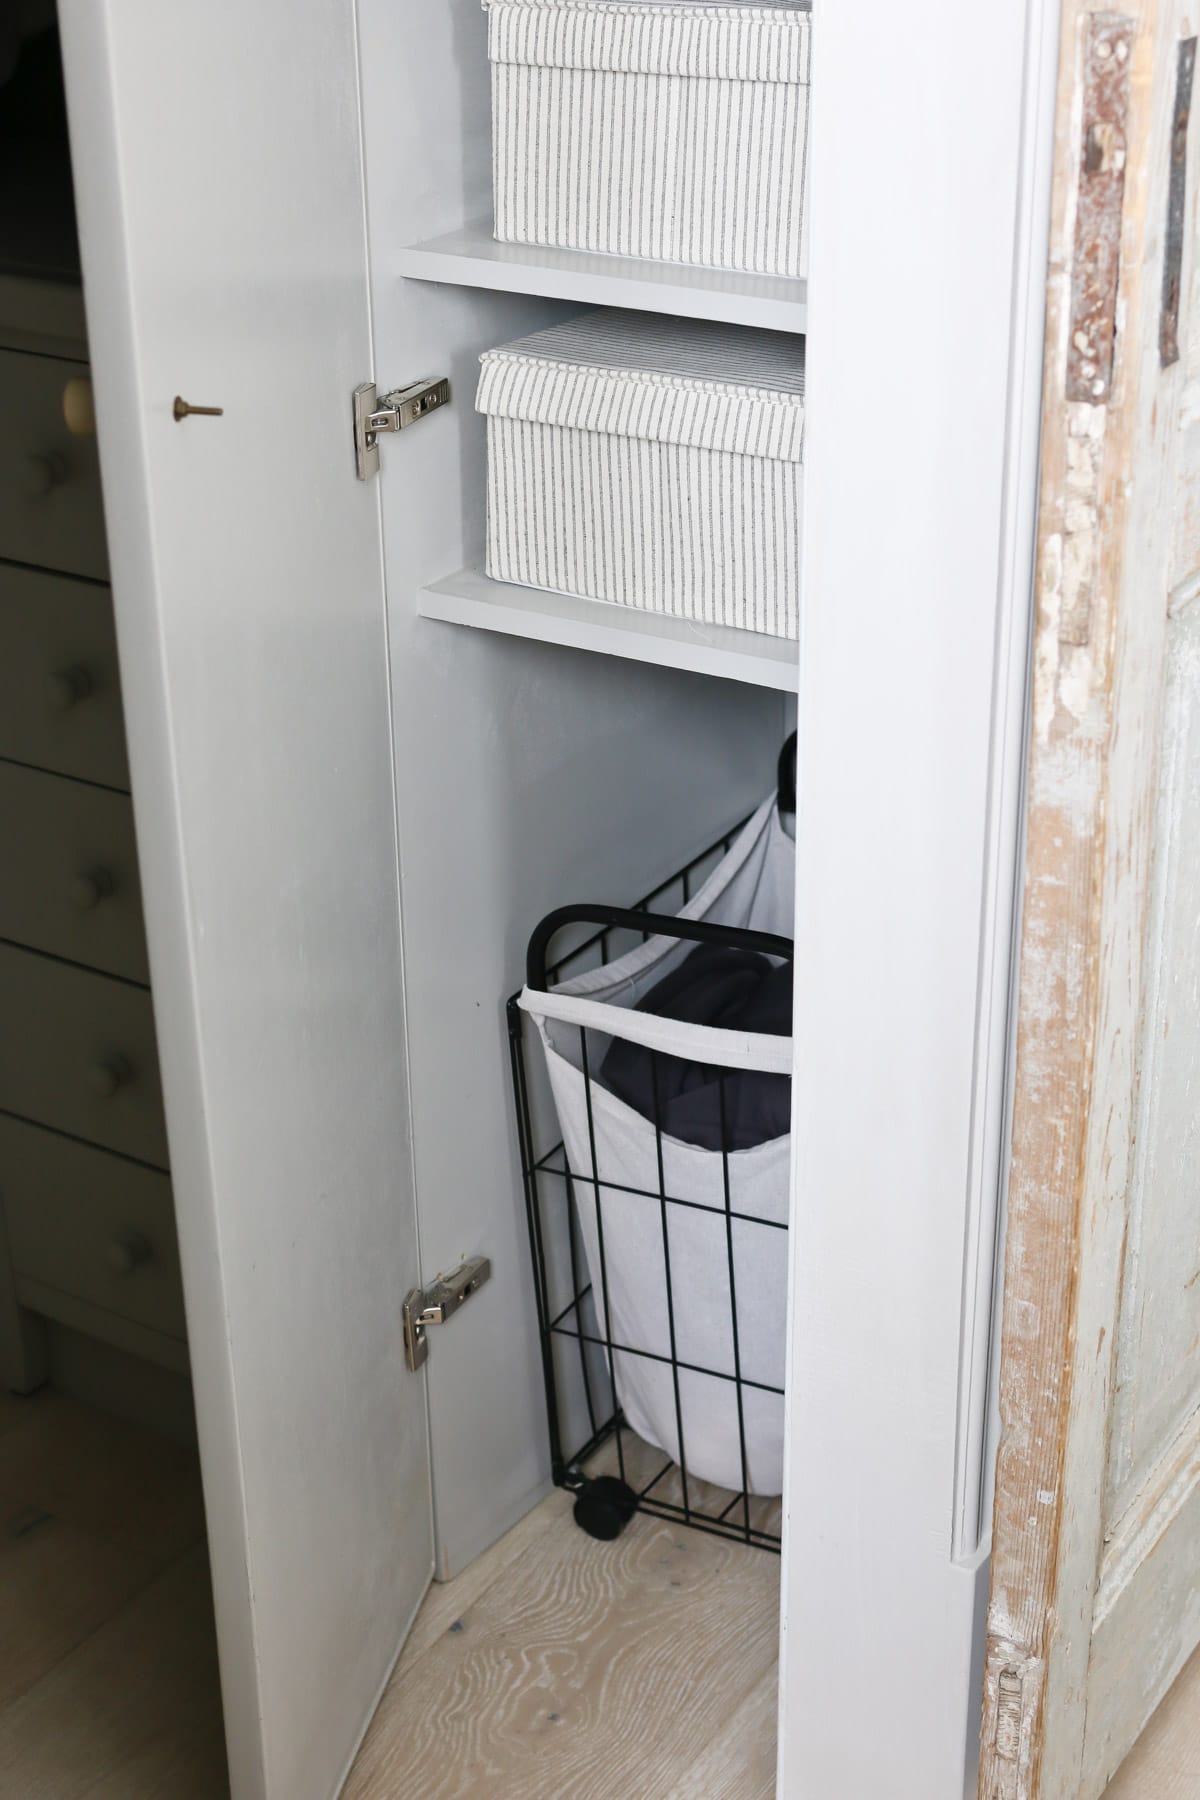 storing laundry basket in bedroom closet